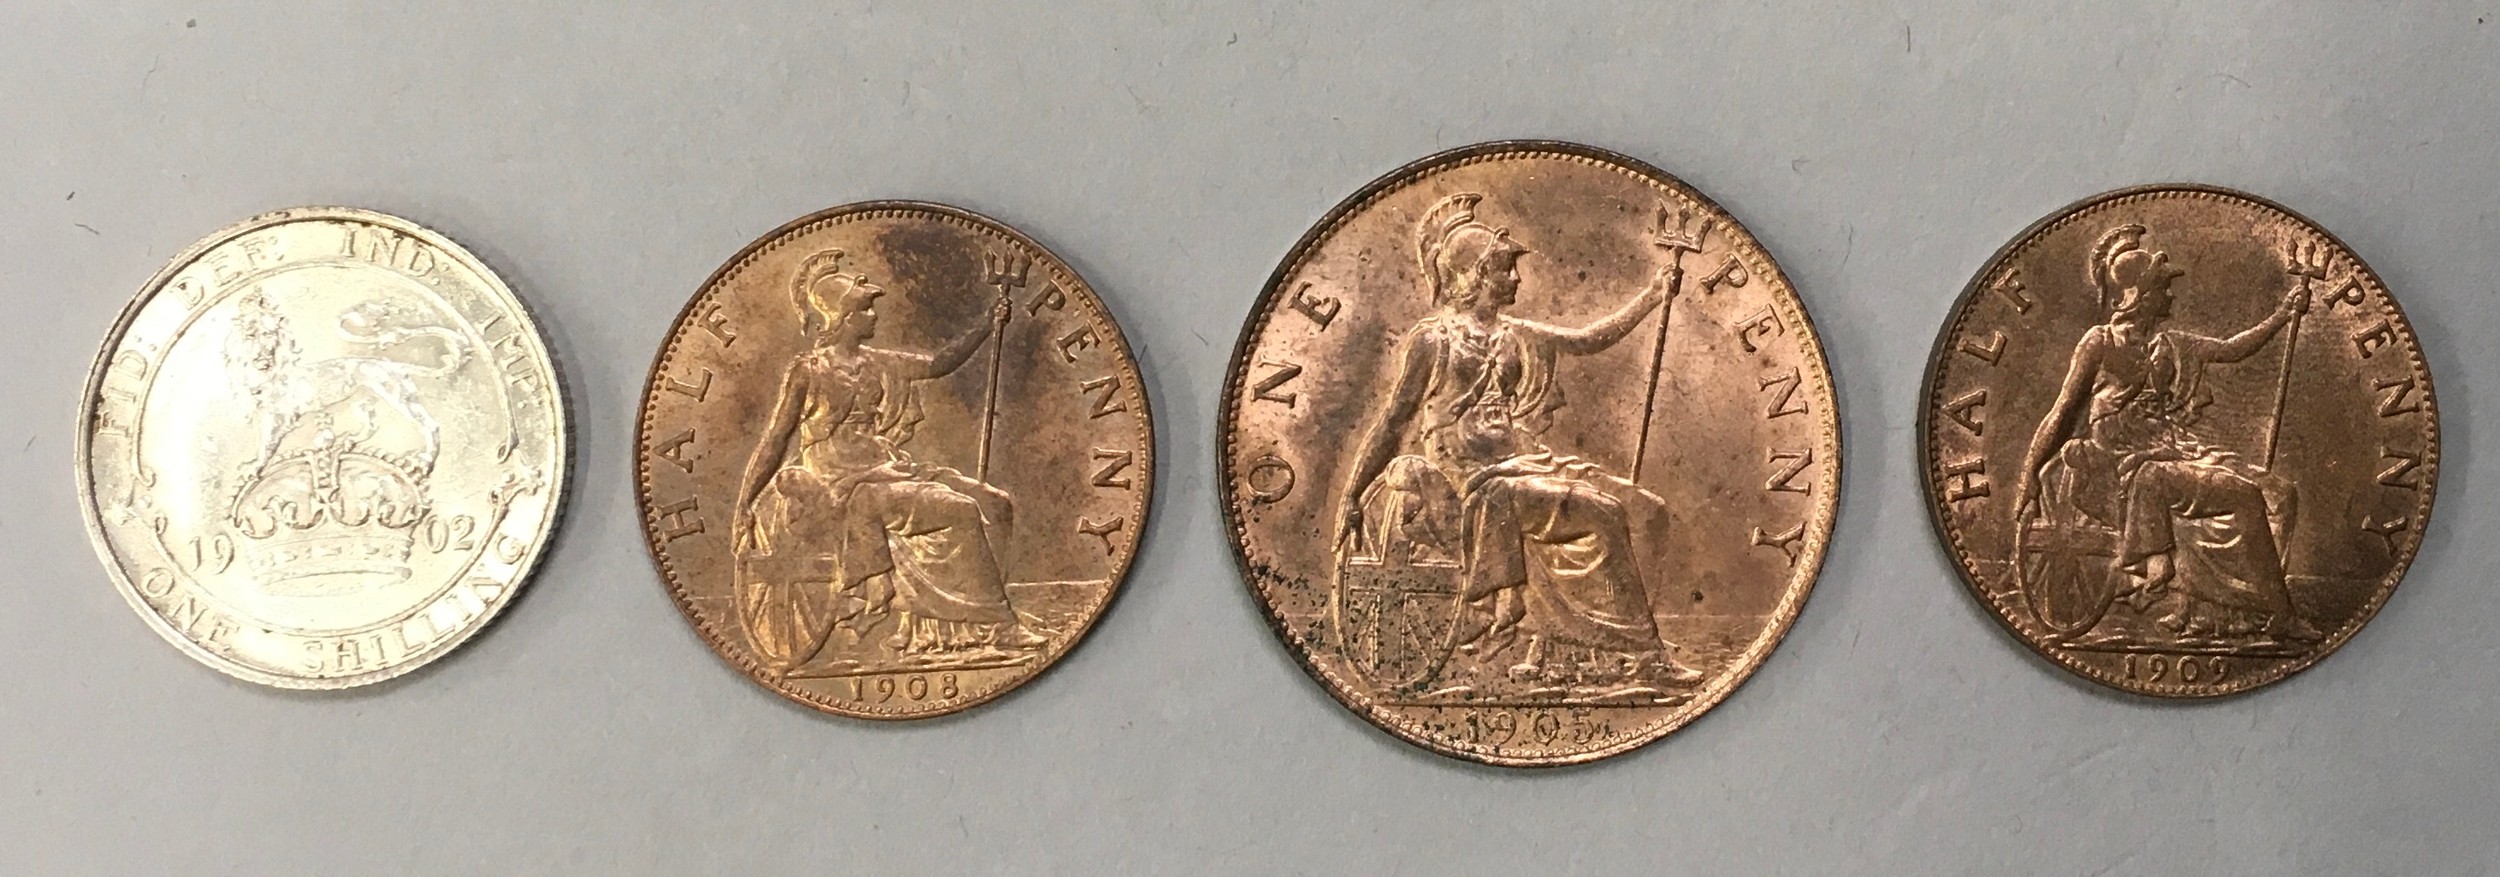 Edward VII 1902 shilling , 1905 penny ,1908-1909 half pennies